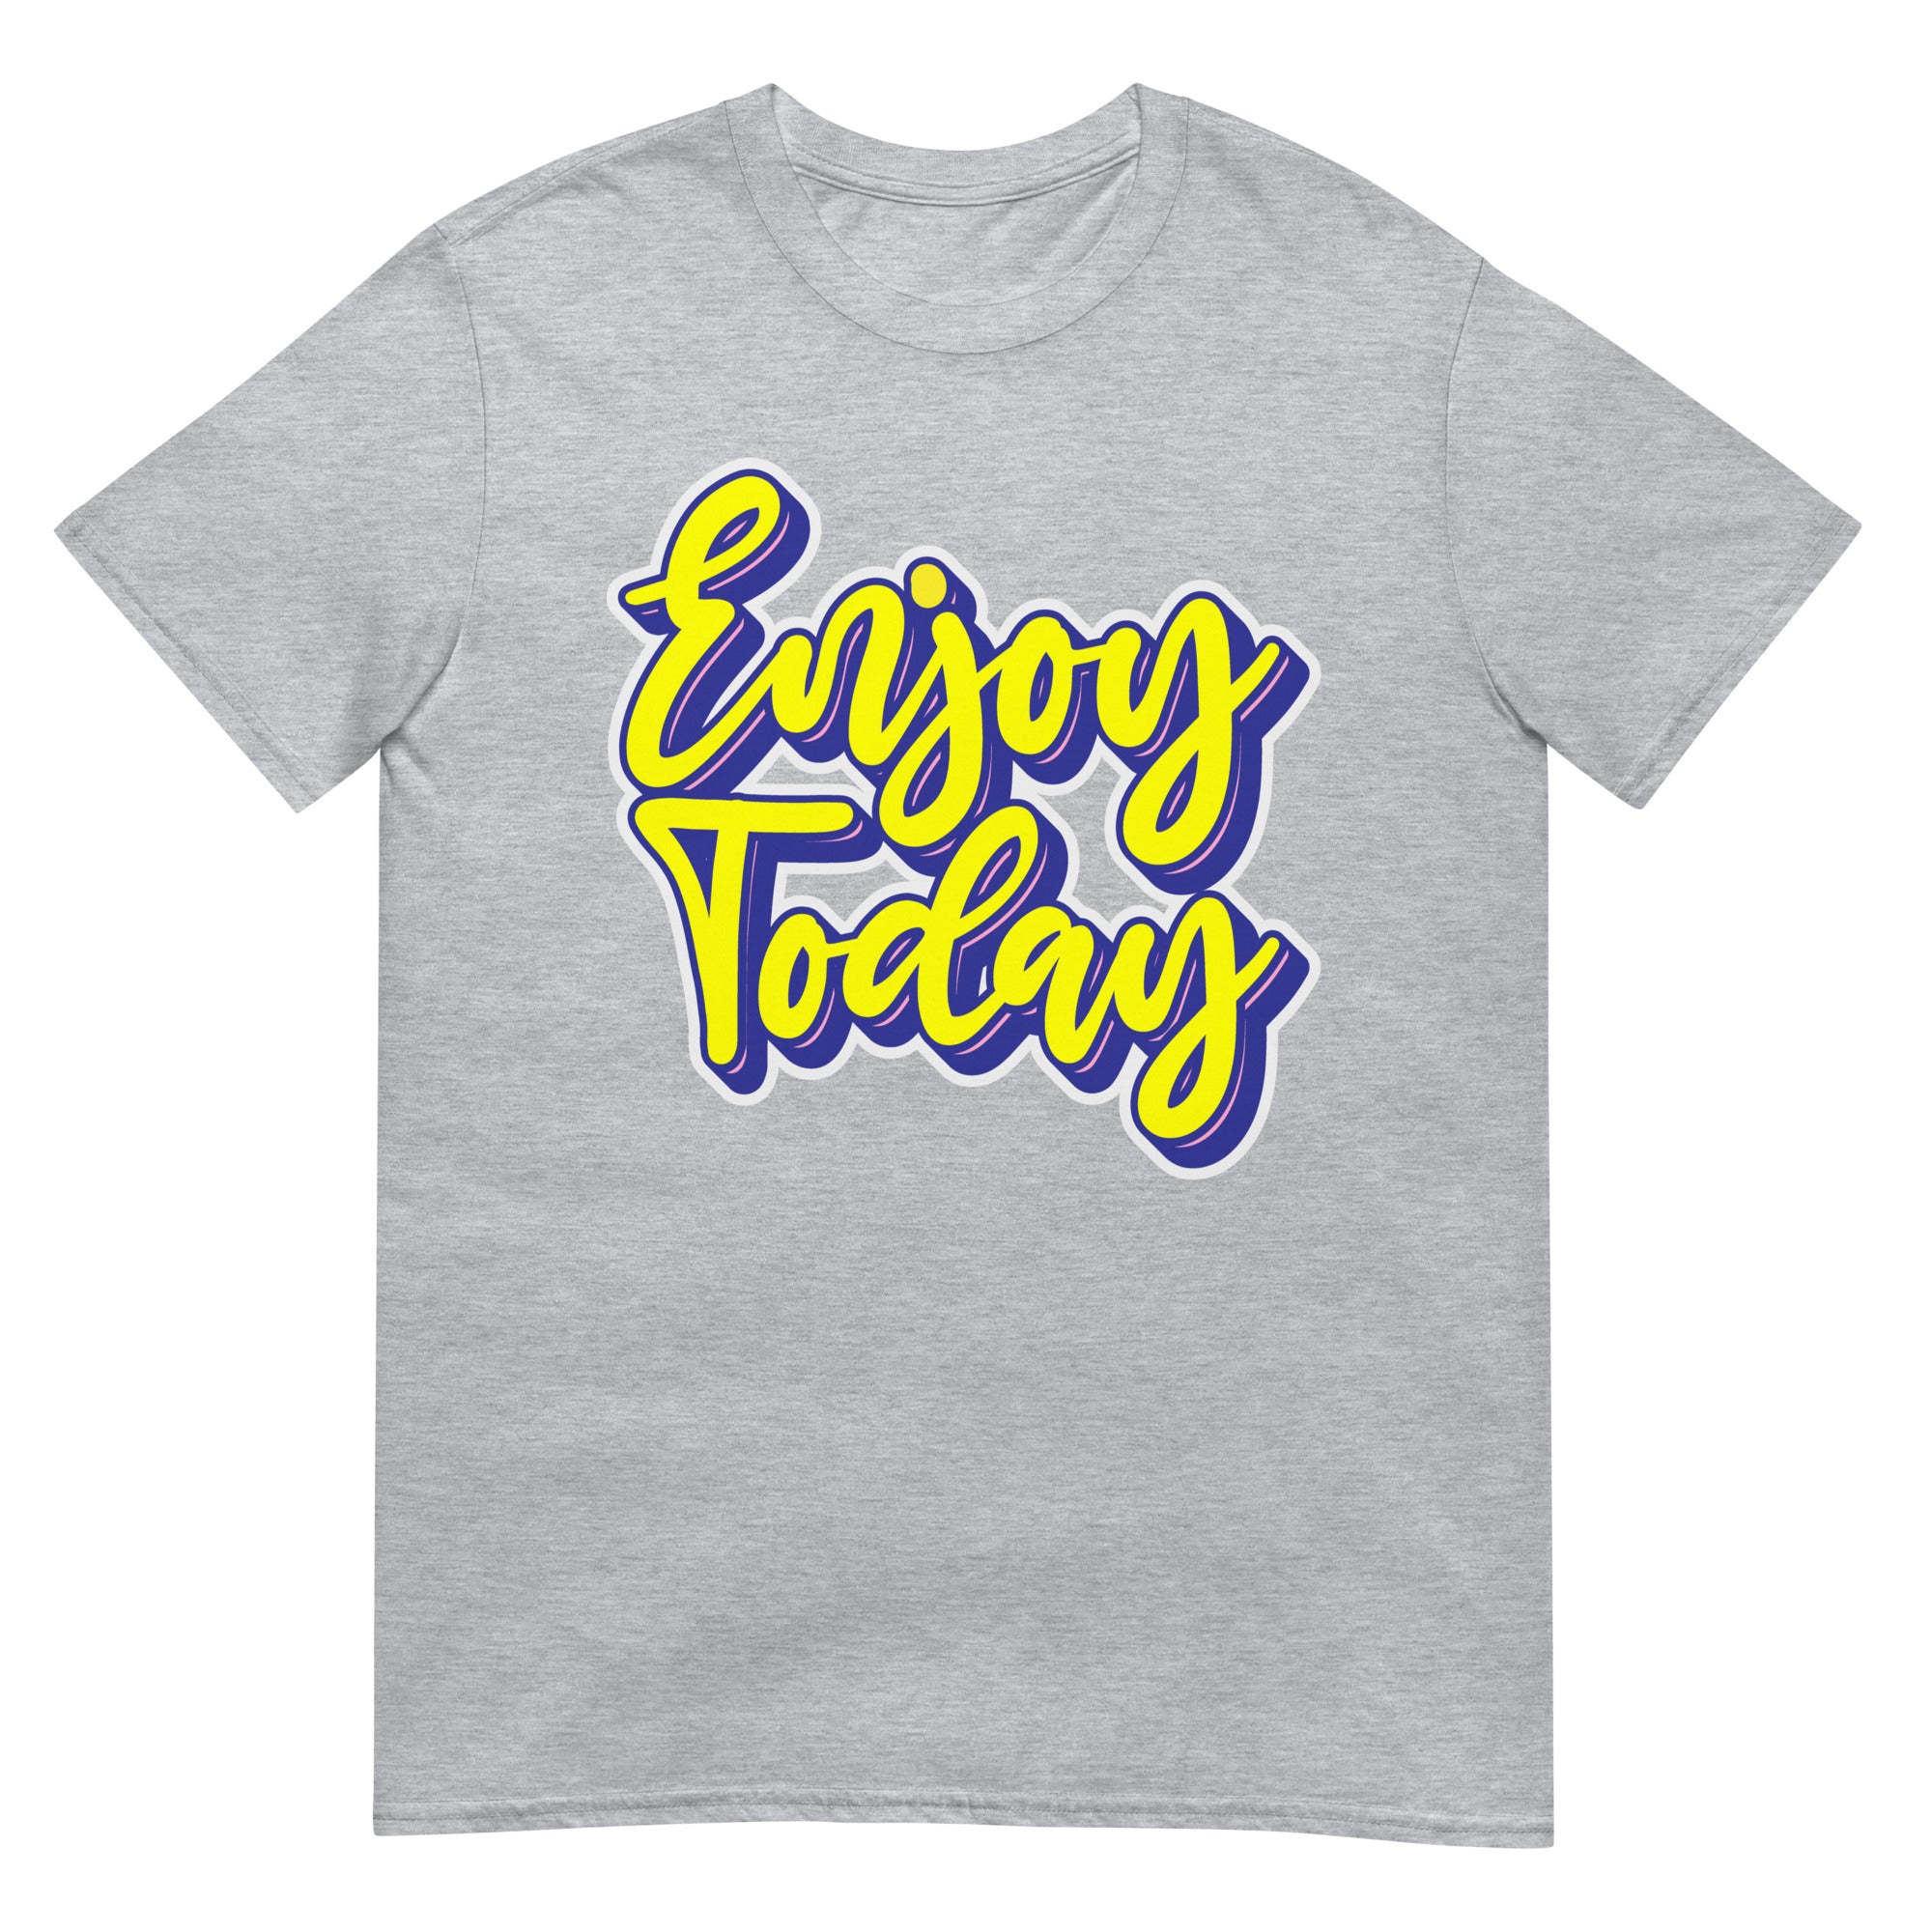 Enjoy Today - Short-Sleeve Unisex T-Shirt